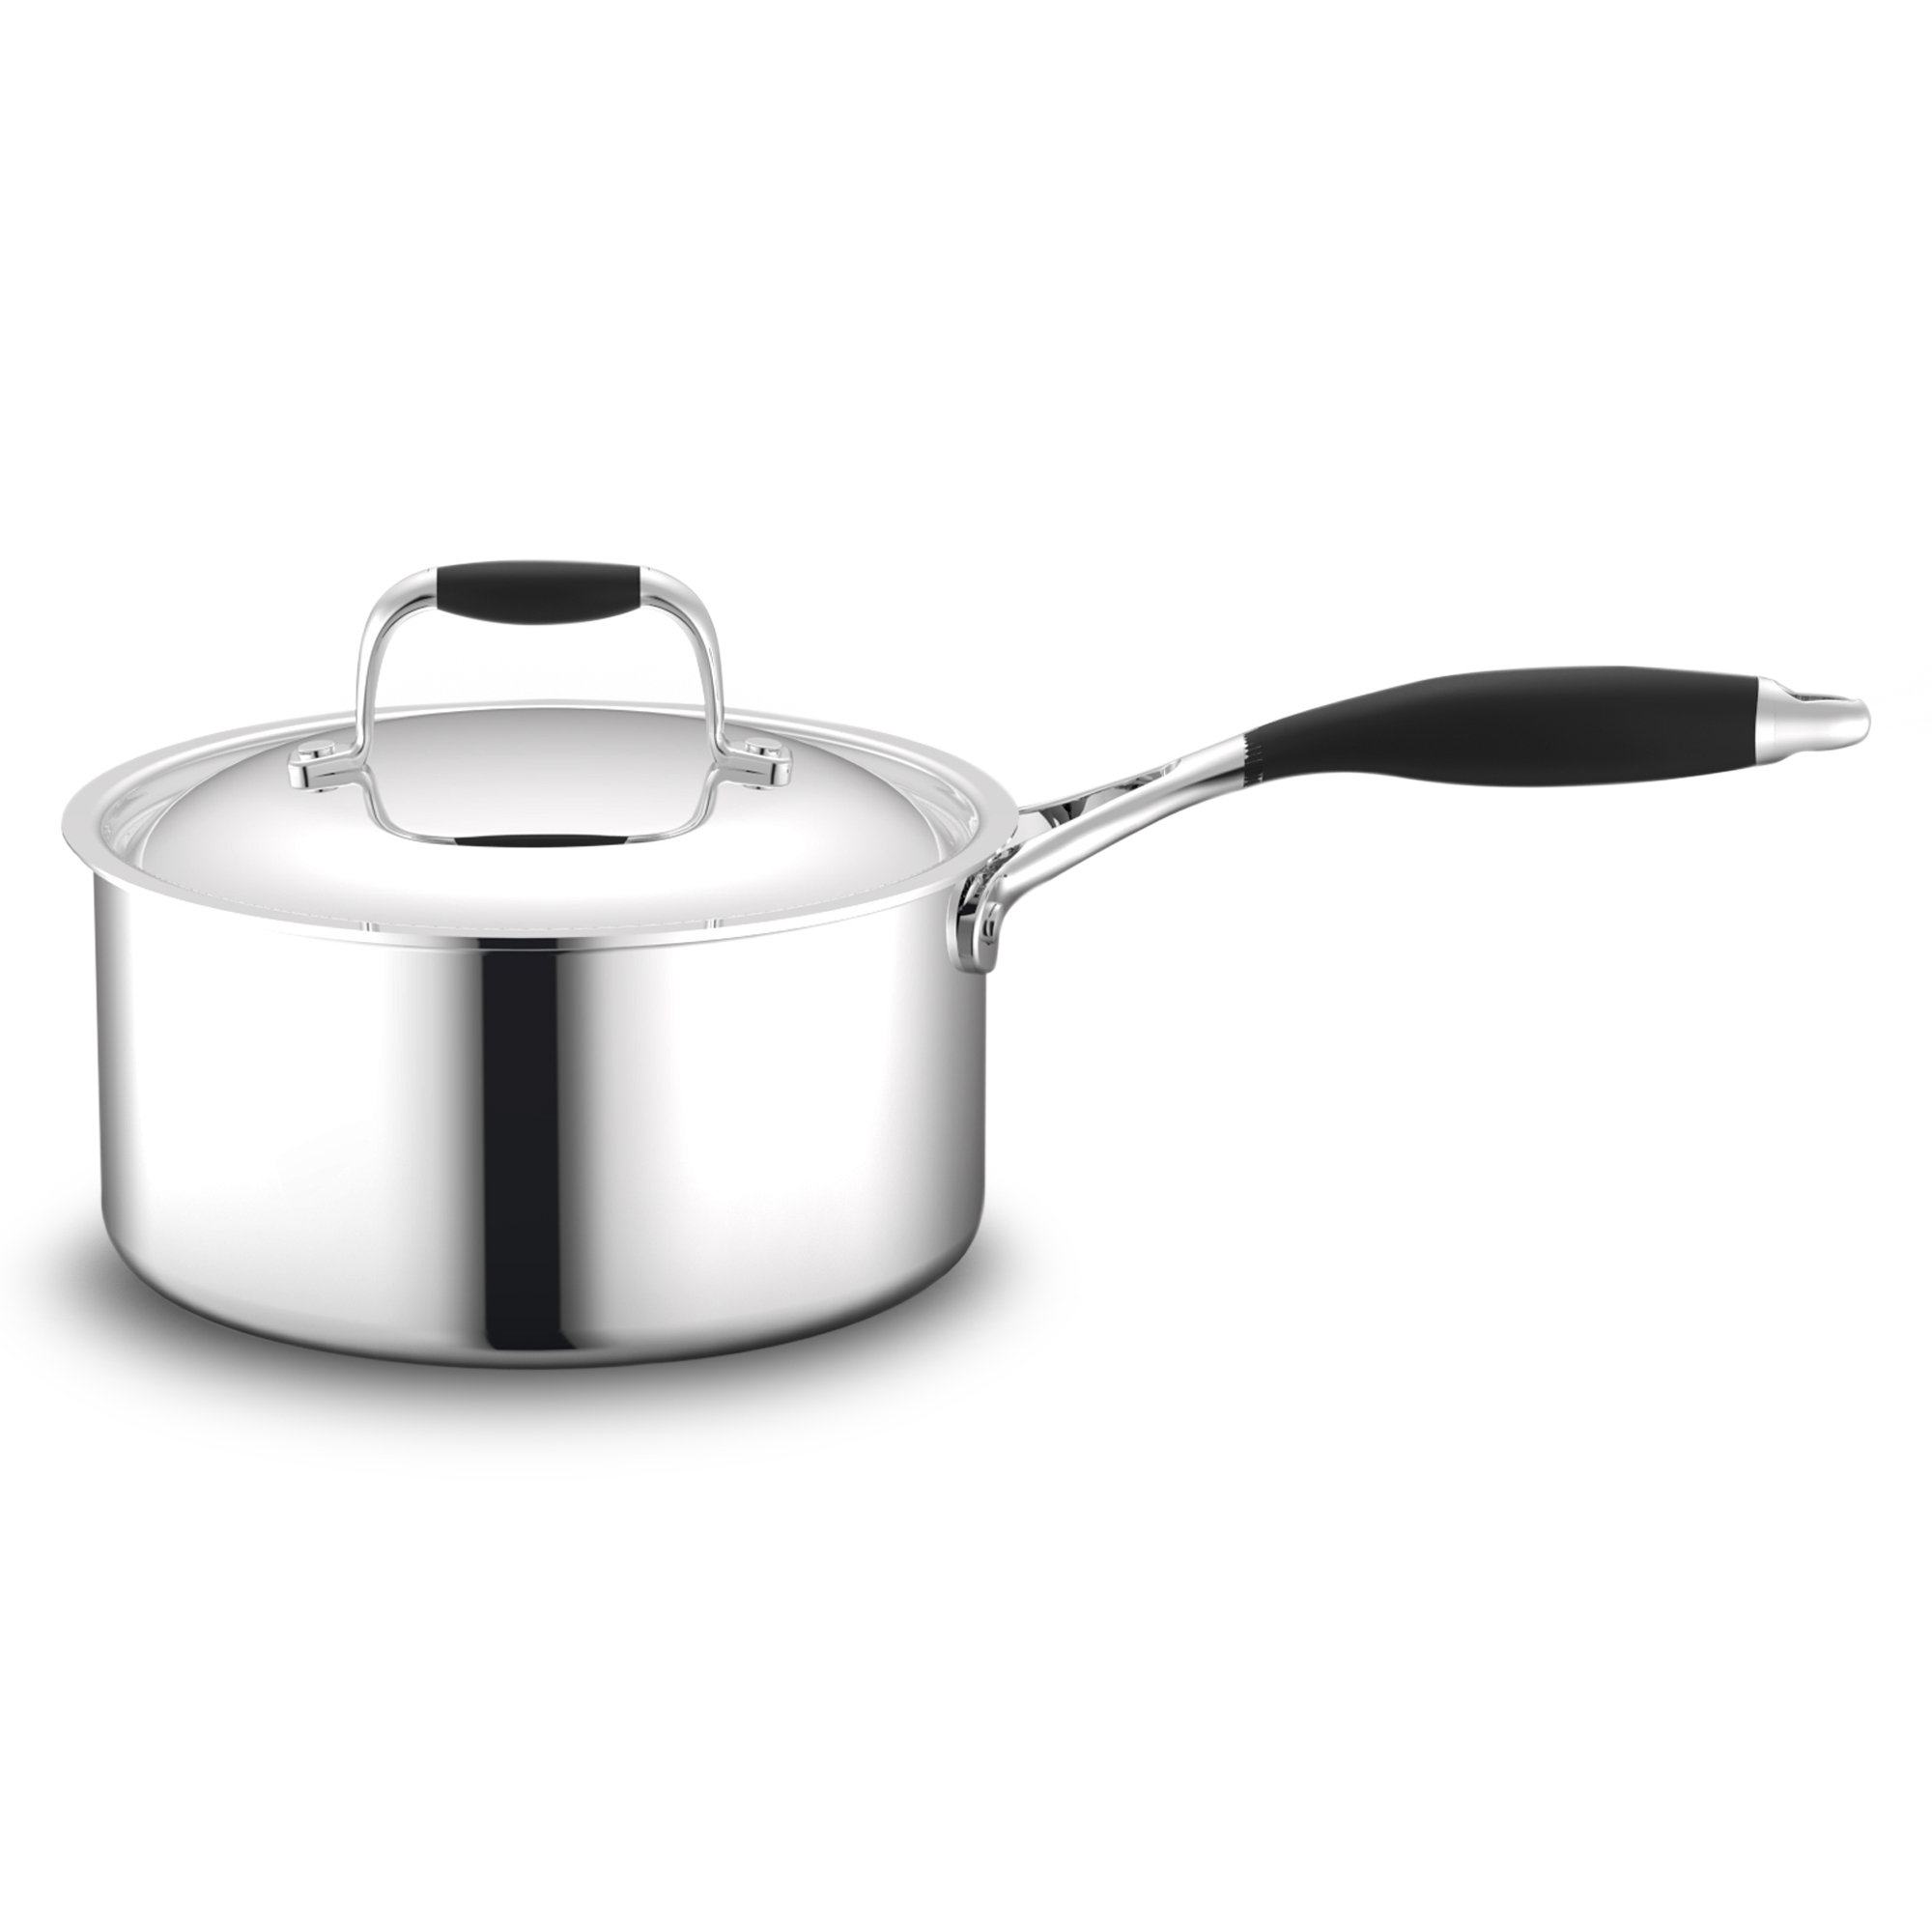 1 Quart Saucepan with Lid 18/10 Stainless Steel Nonstick Small Sauce Pan Pot